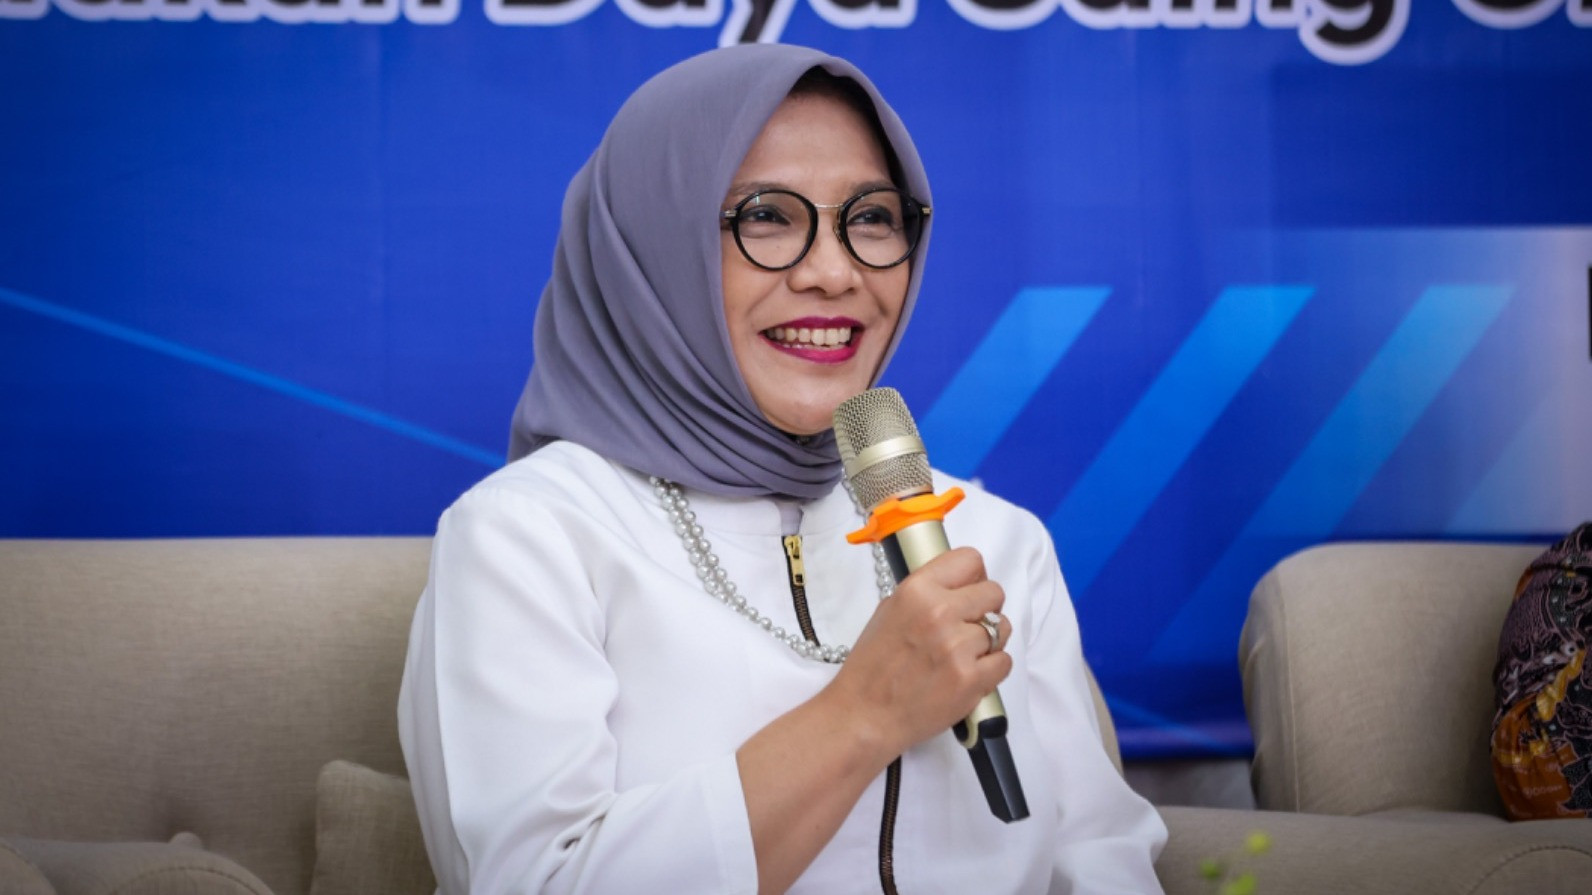 Deputi Bidang Kewirausahaan KemenKopUKM Siti Azizah